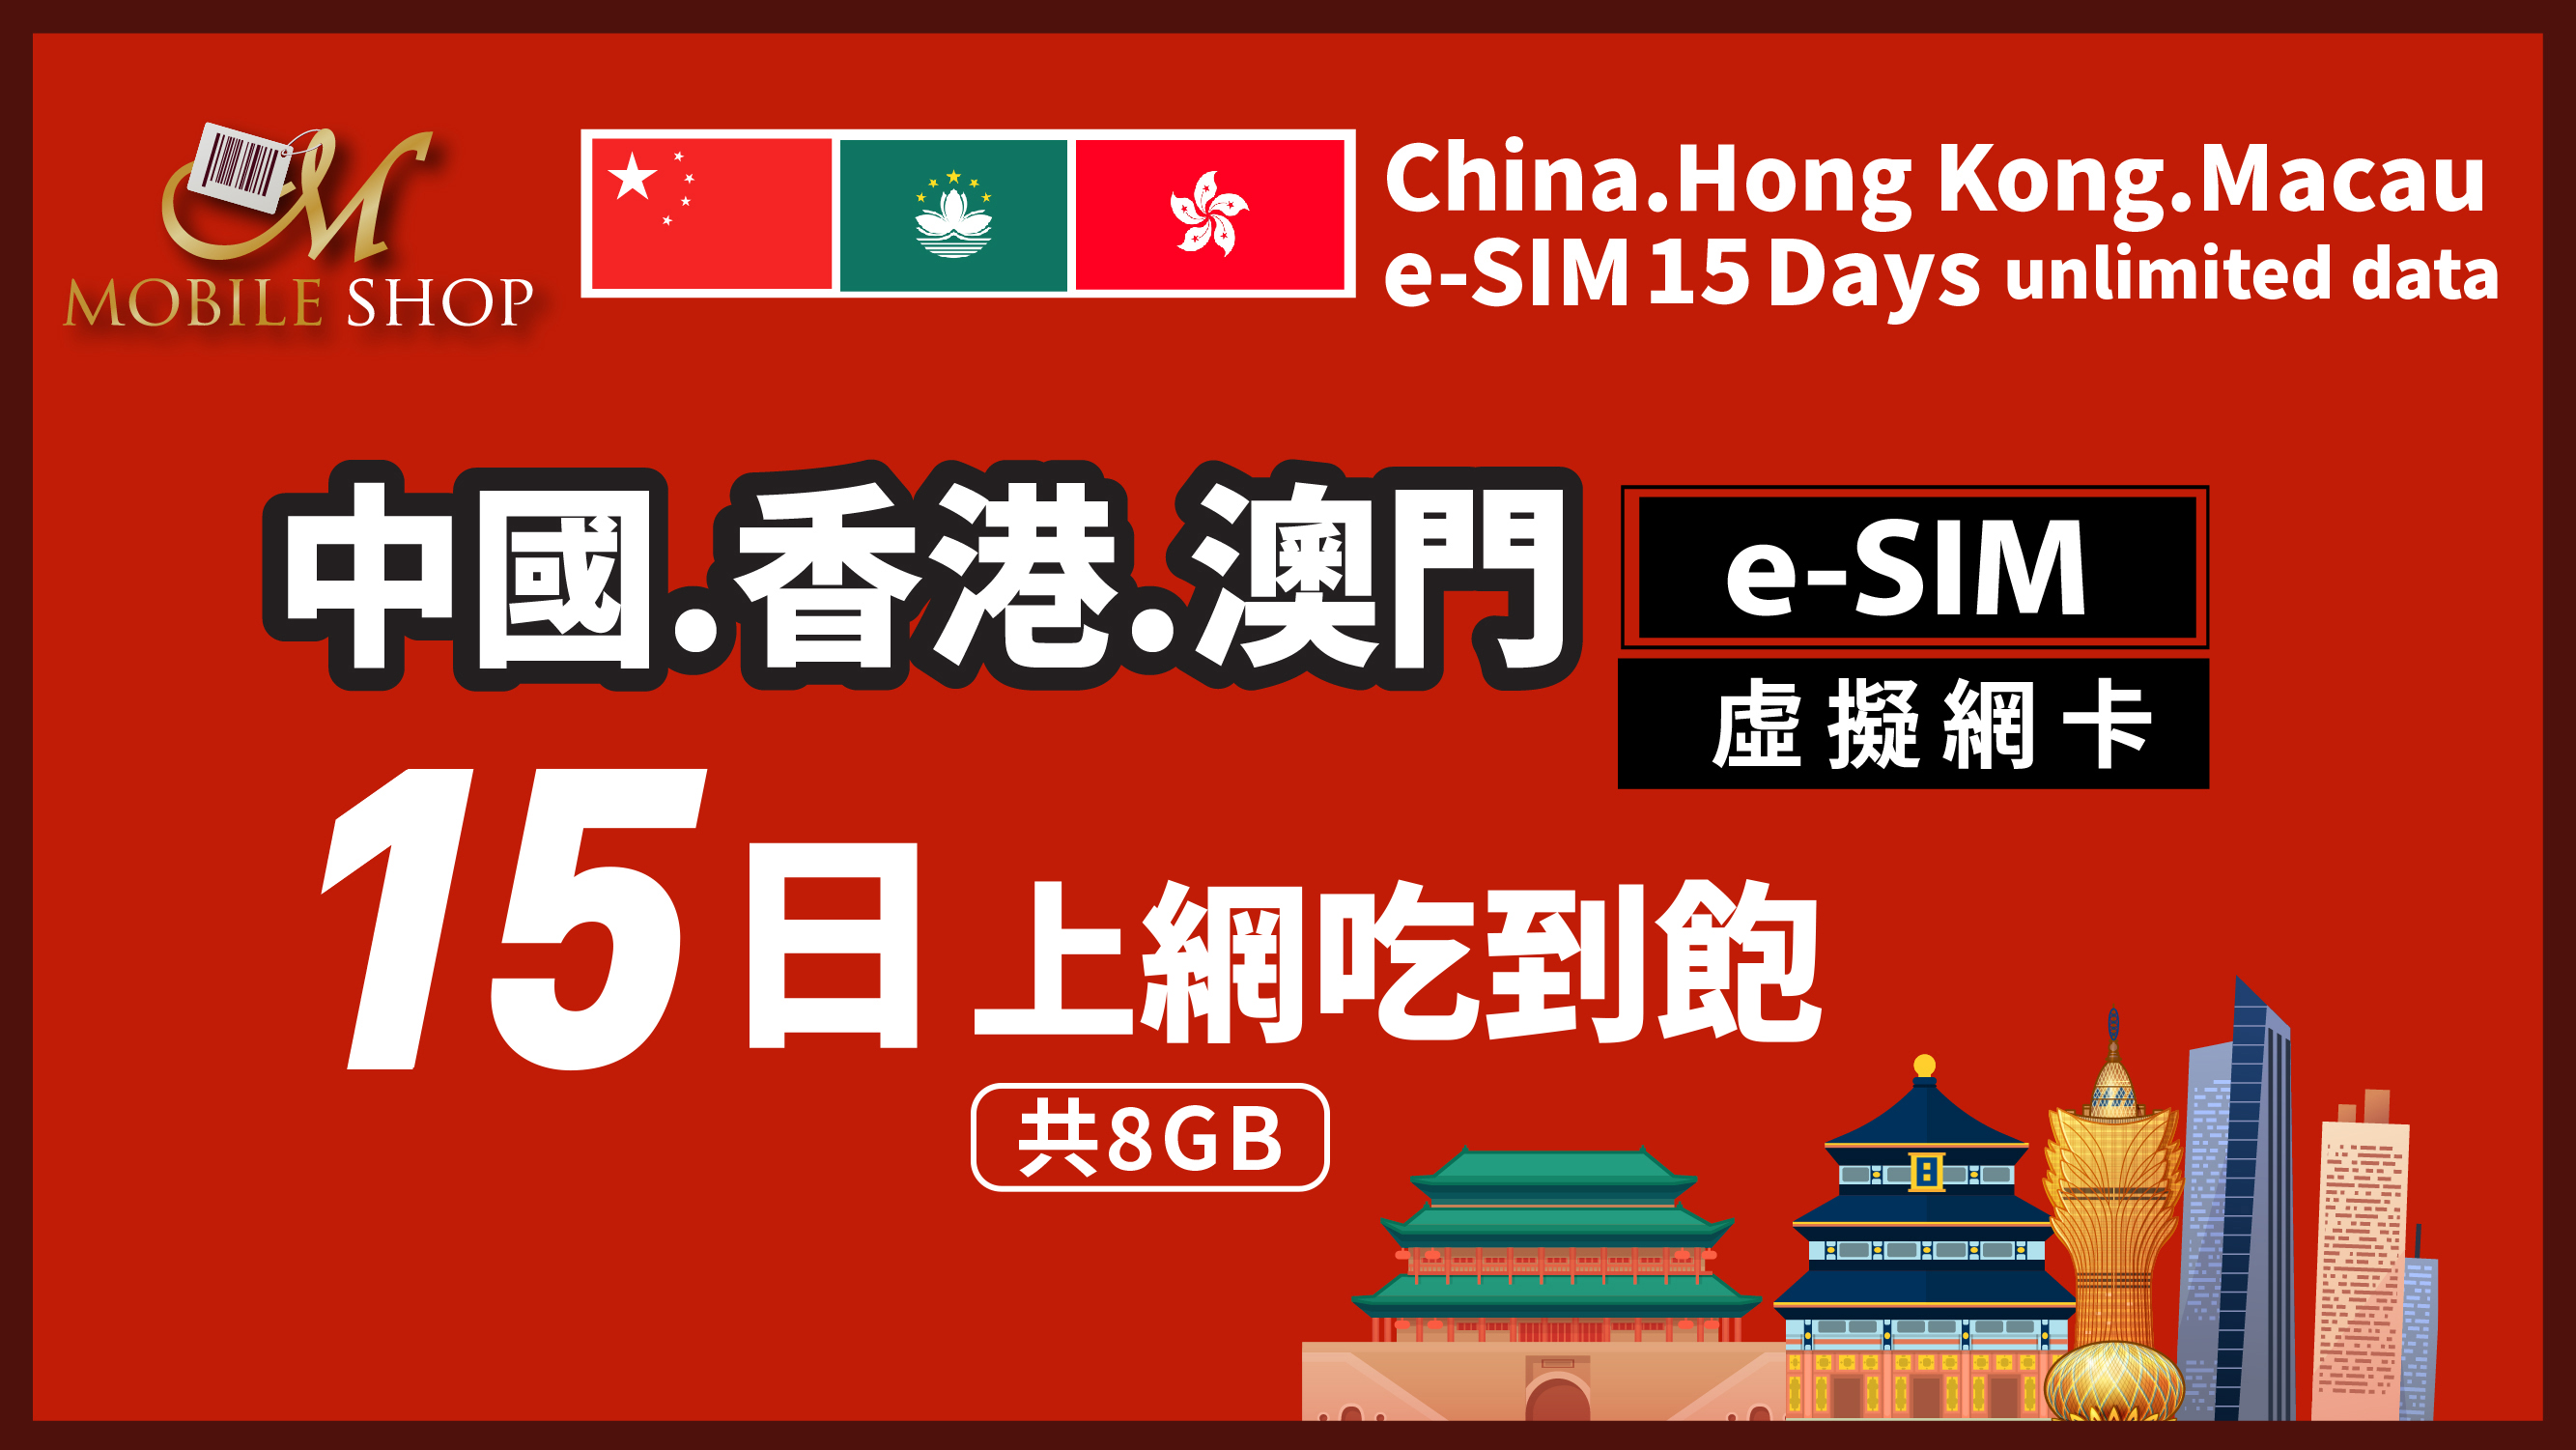 eSIM_China.Hong Kong.Macau-15Days/8GB unlimited data